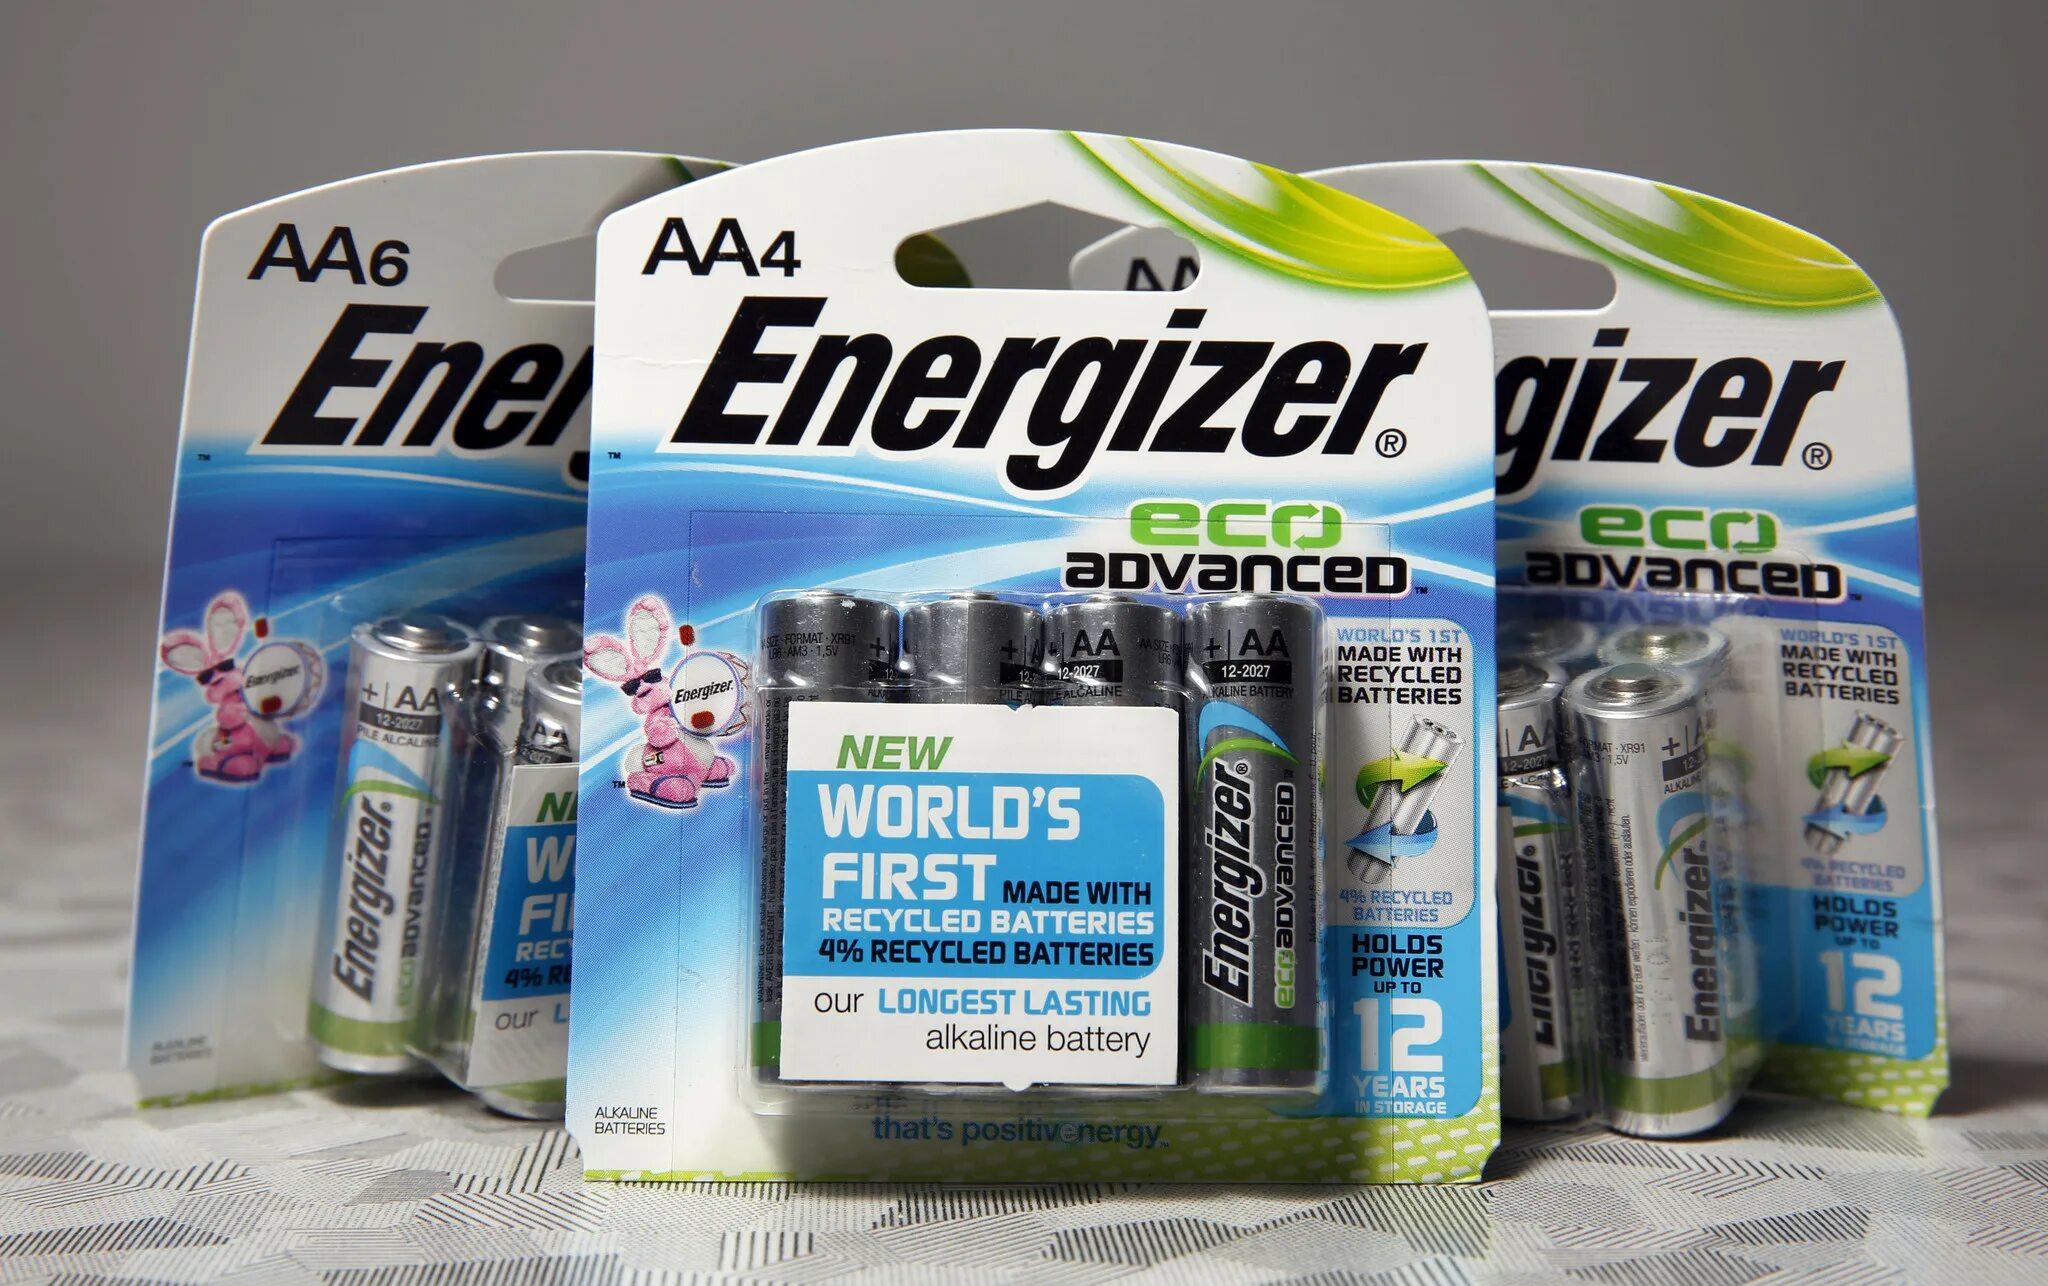 Battery last. Energizer Eco Advanced батарейки. 3 Батарейки ААА Ergolux. AA AAA батарейки. Батарейки похожие на Energizer.